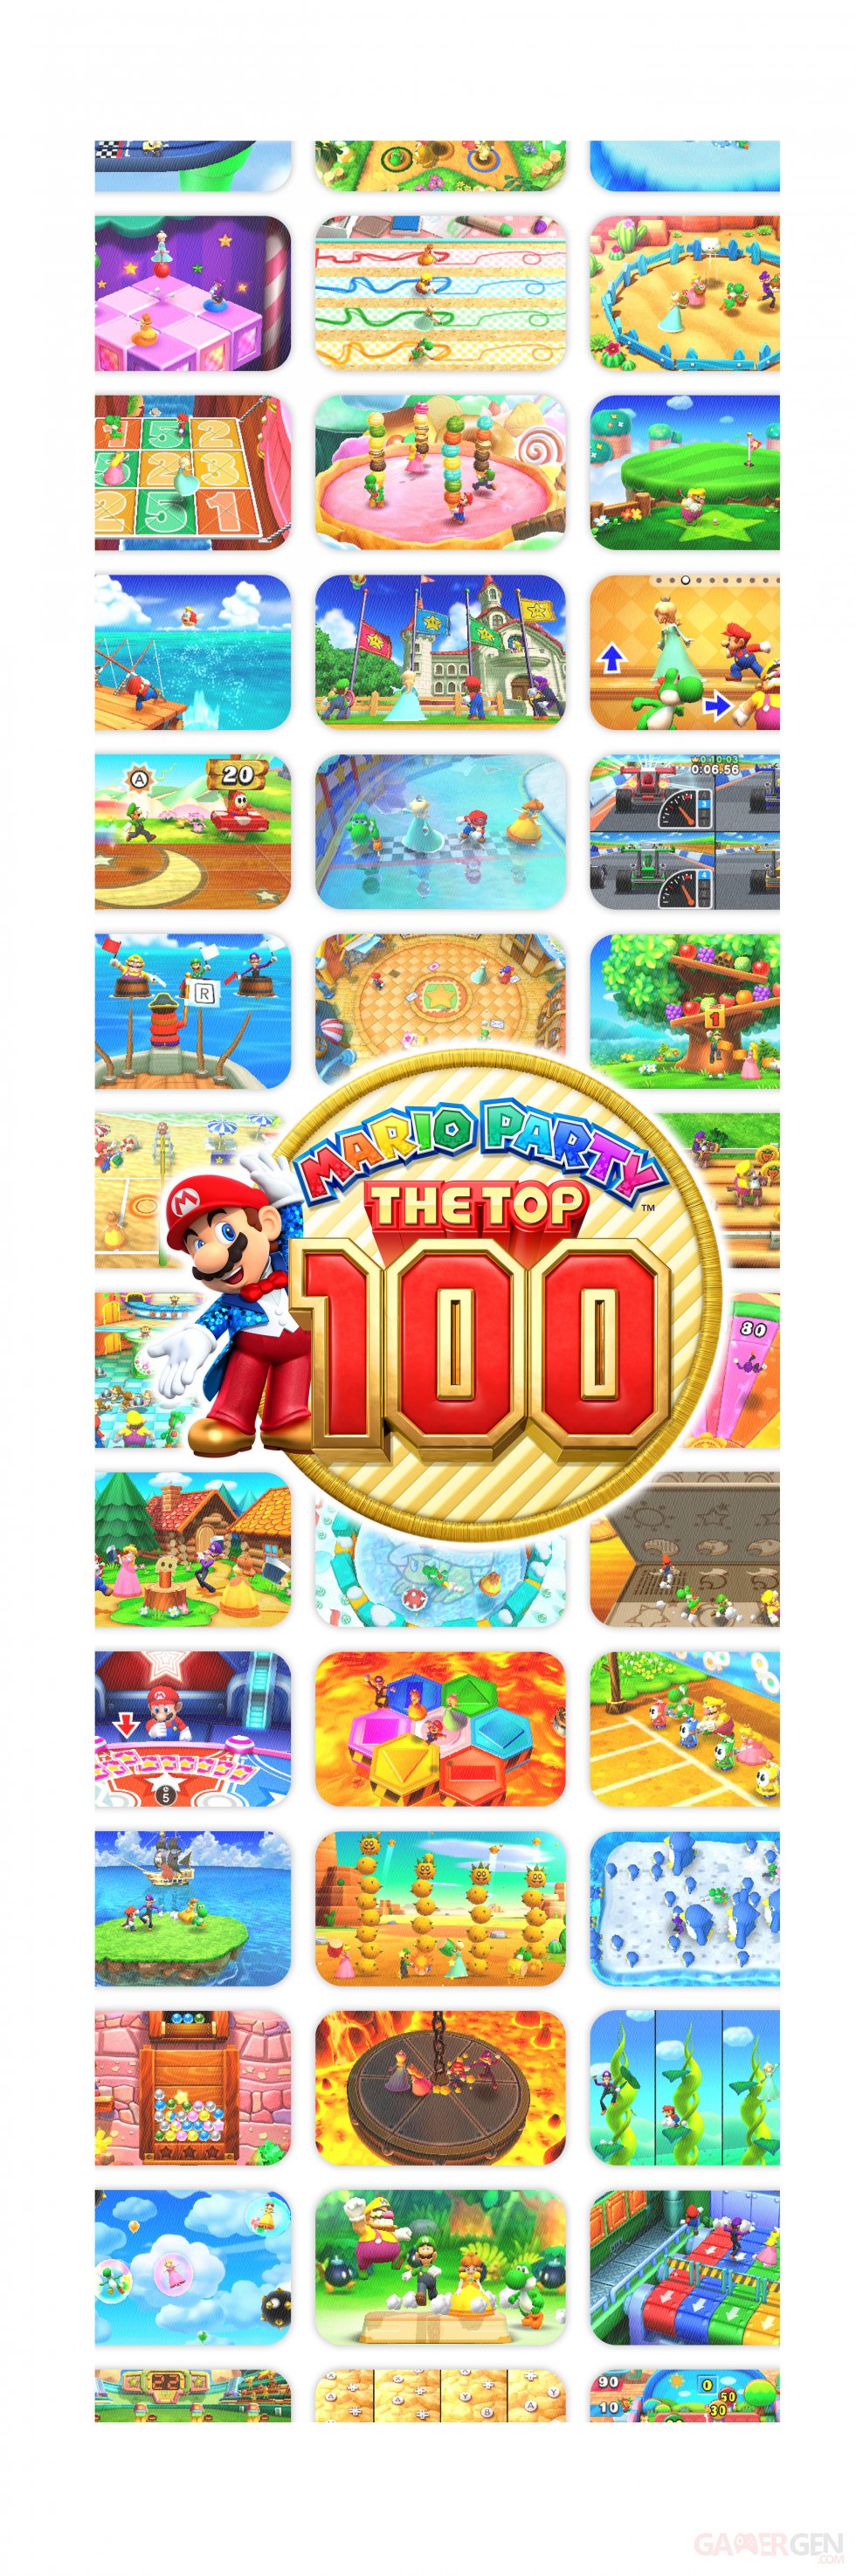 Mario-Party-The-Top-100_2017_09-13-17_009